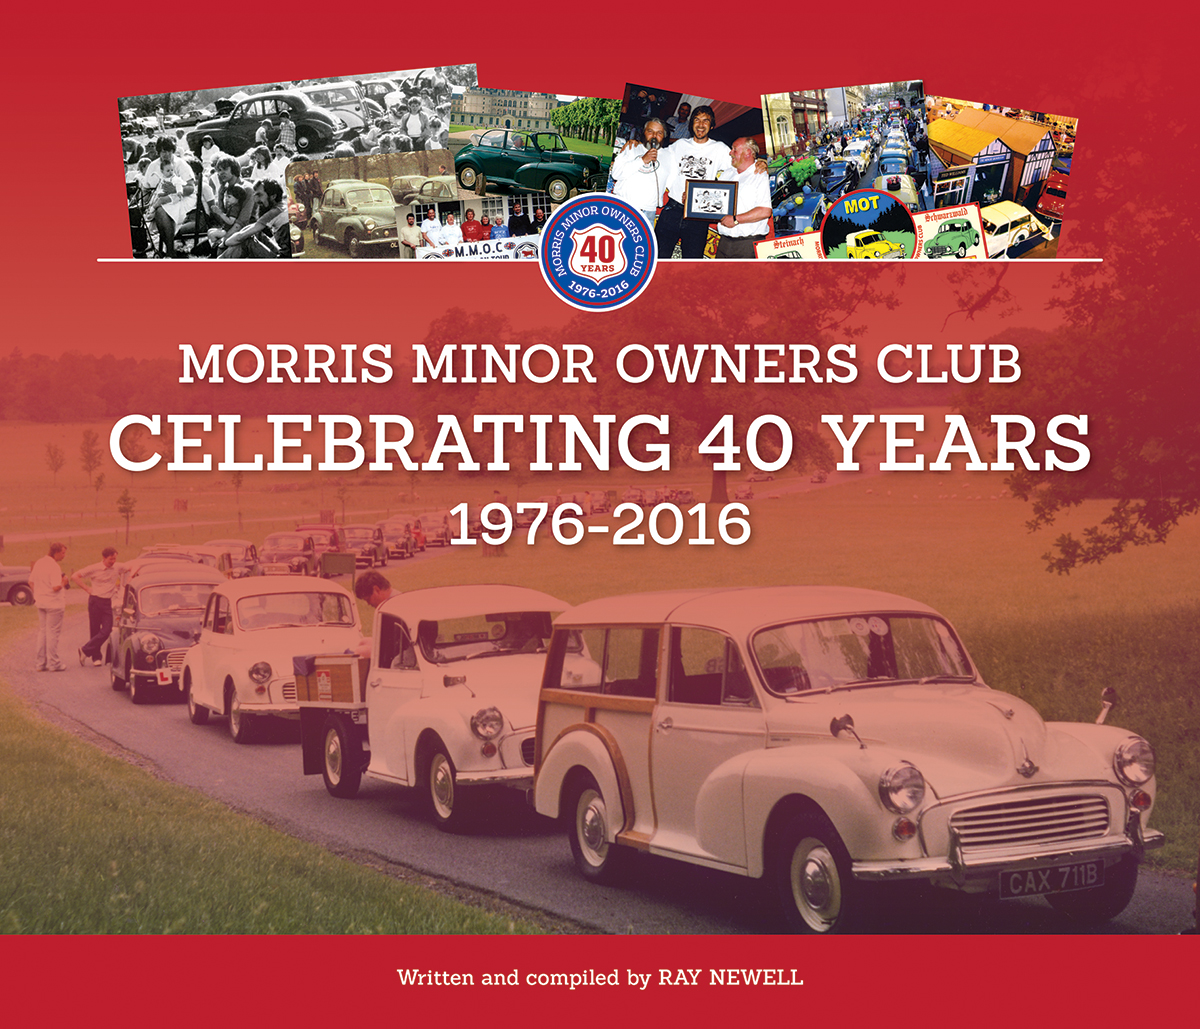 Morris Minor Owners Club Celebrating 40 years